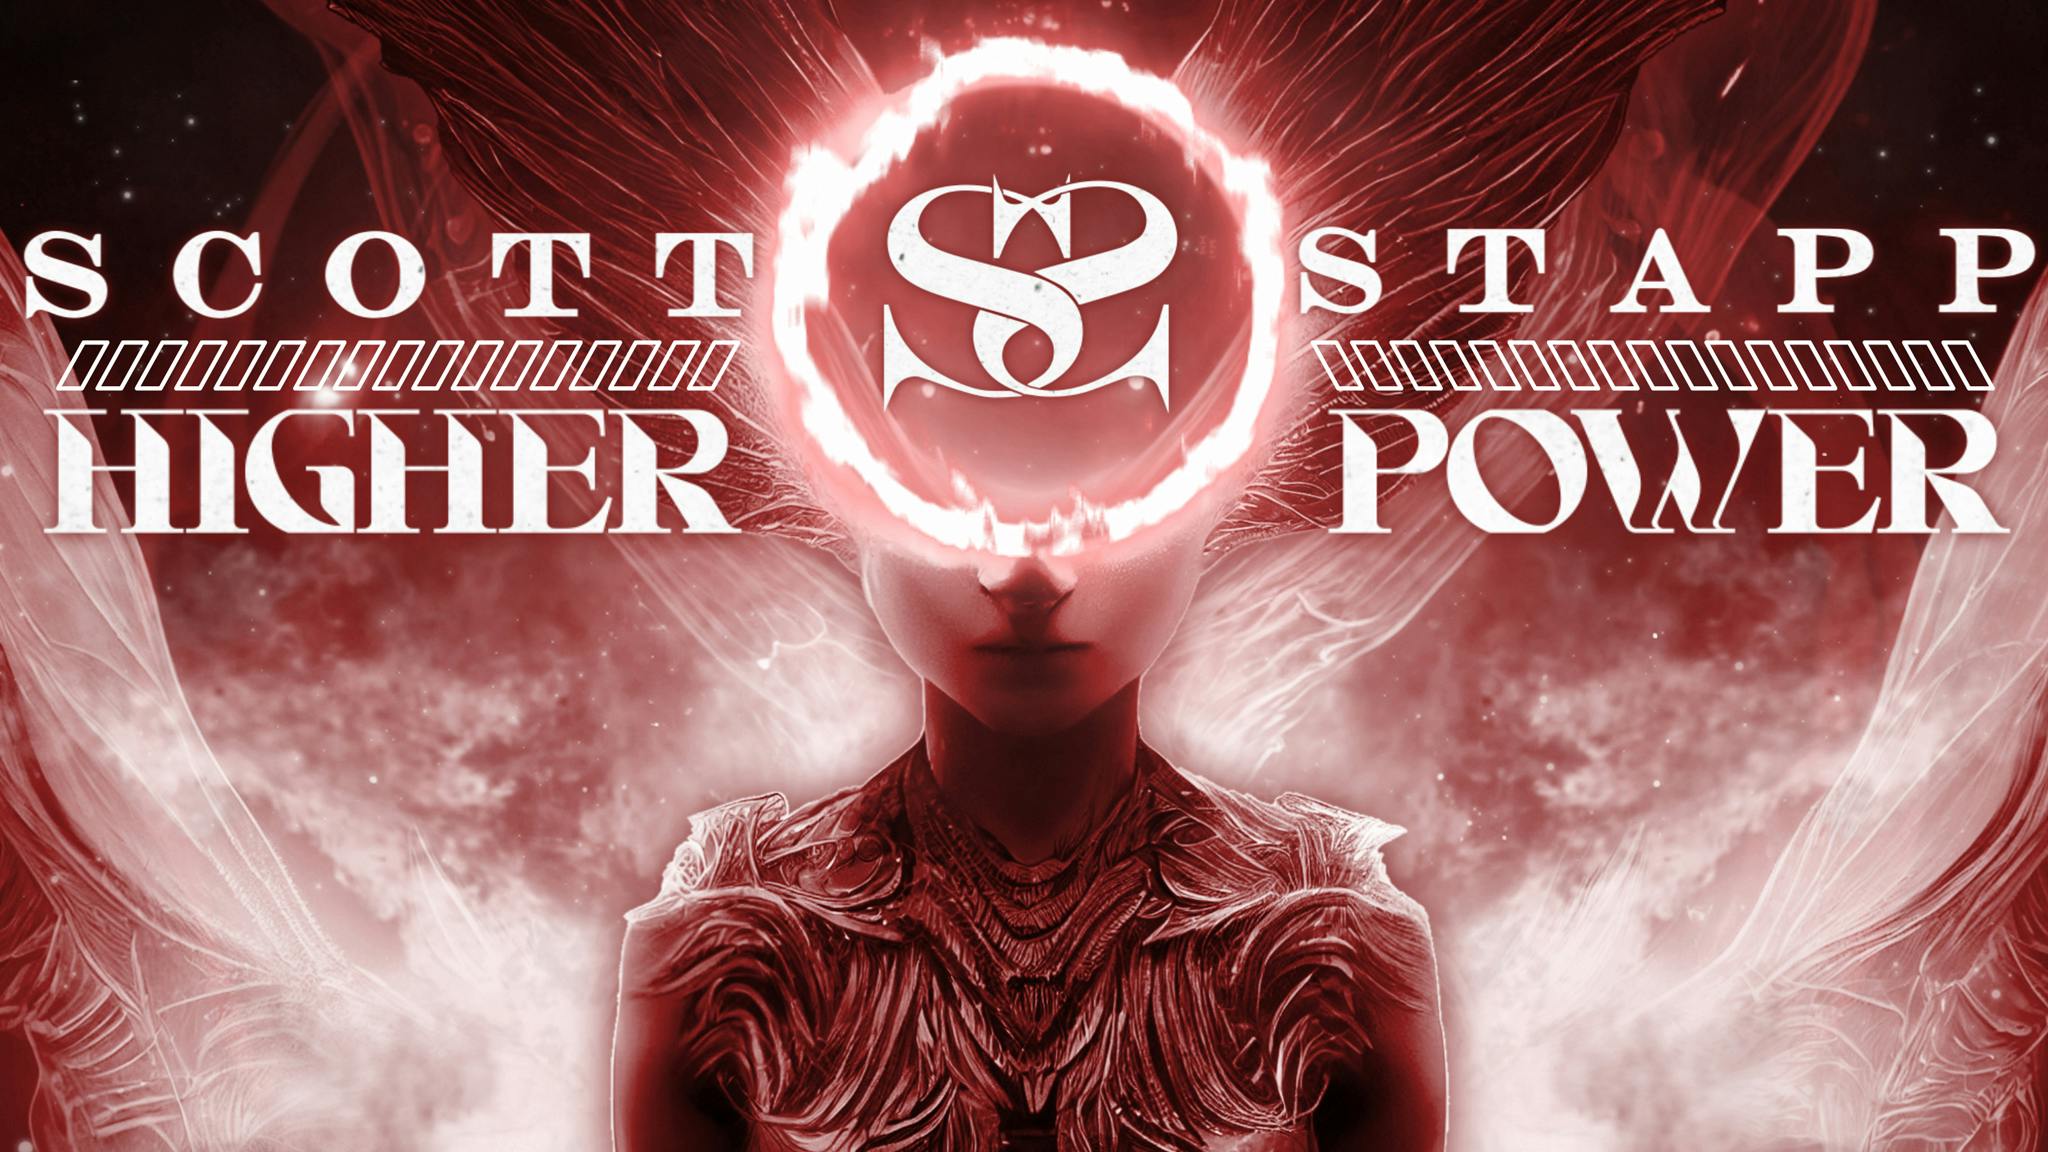 Album review: Scott Stapp – Higher Power